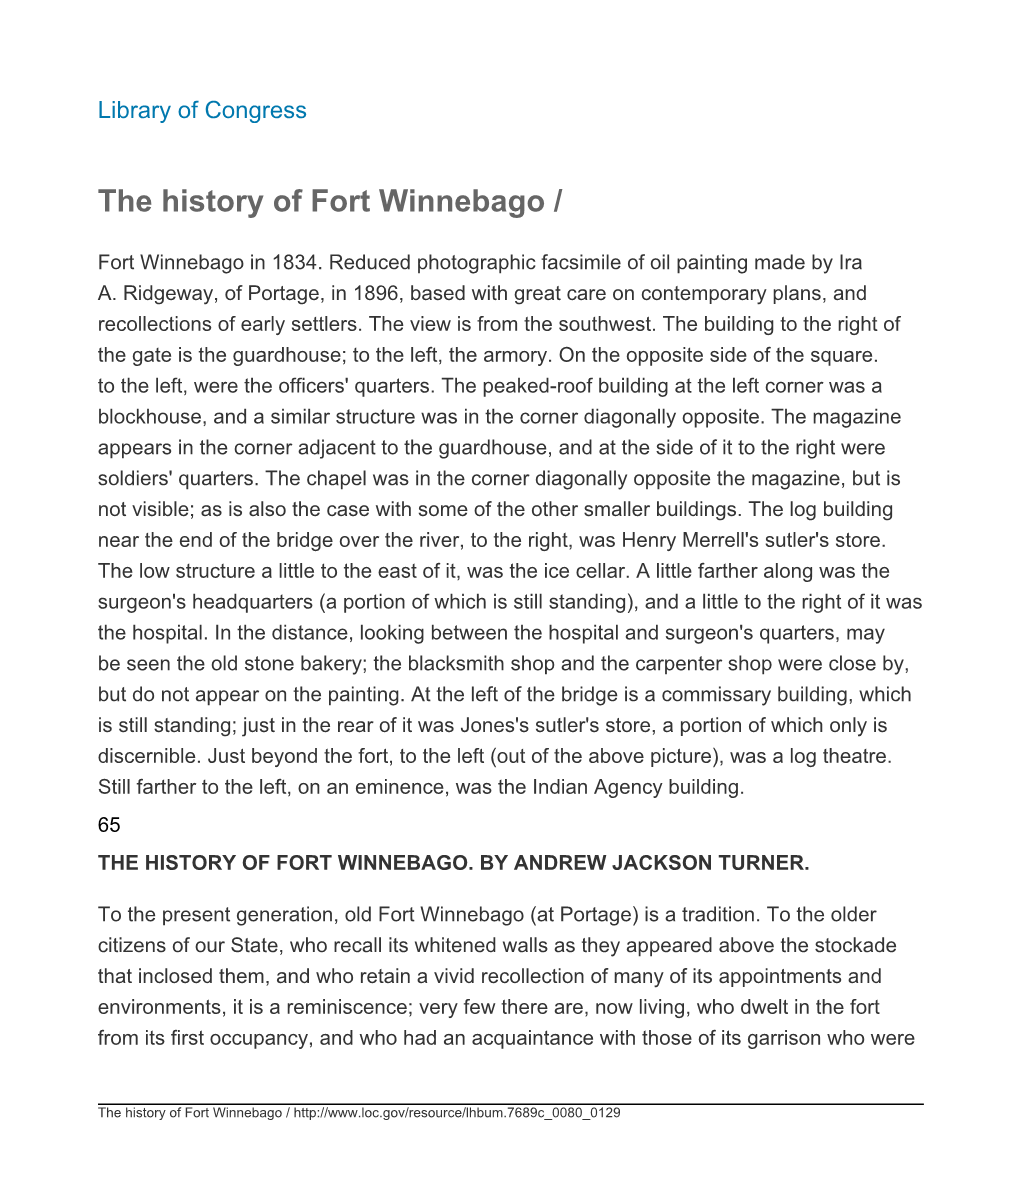 The History of Fort Winnebago